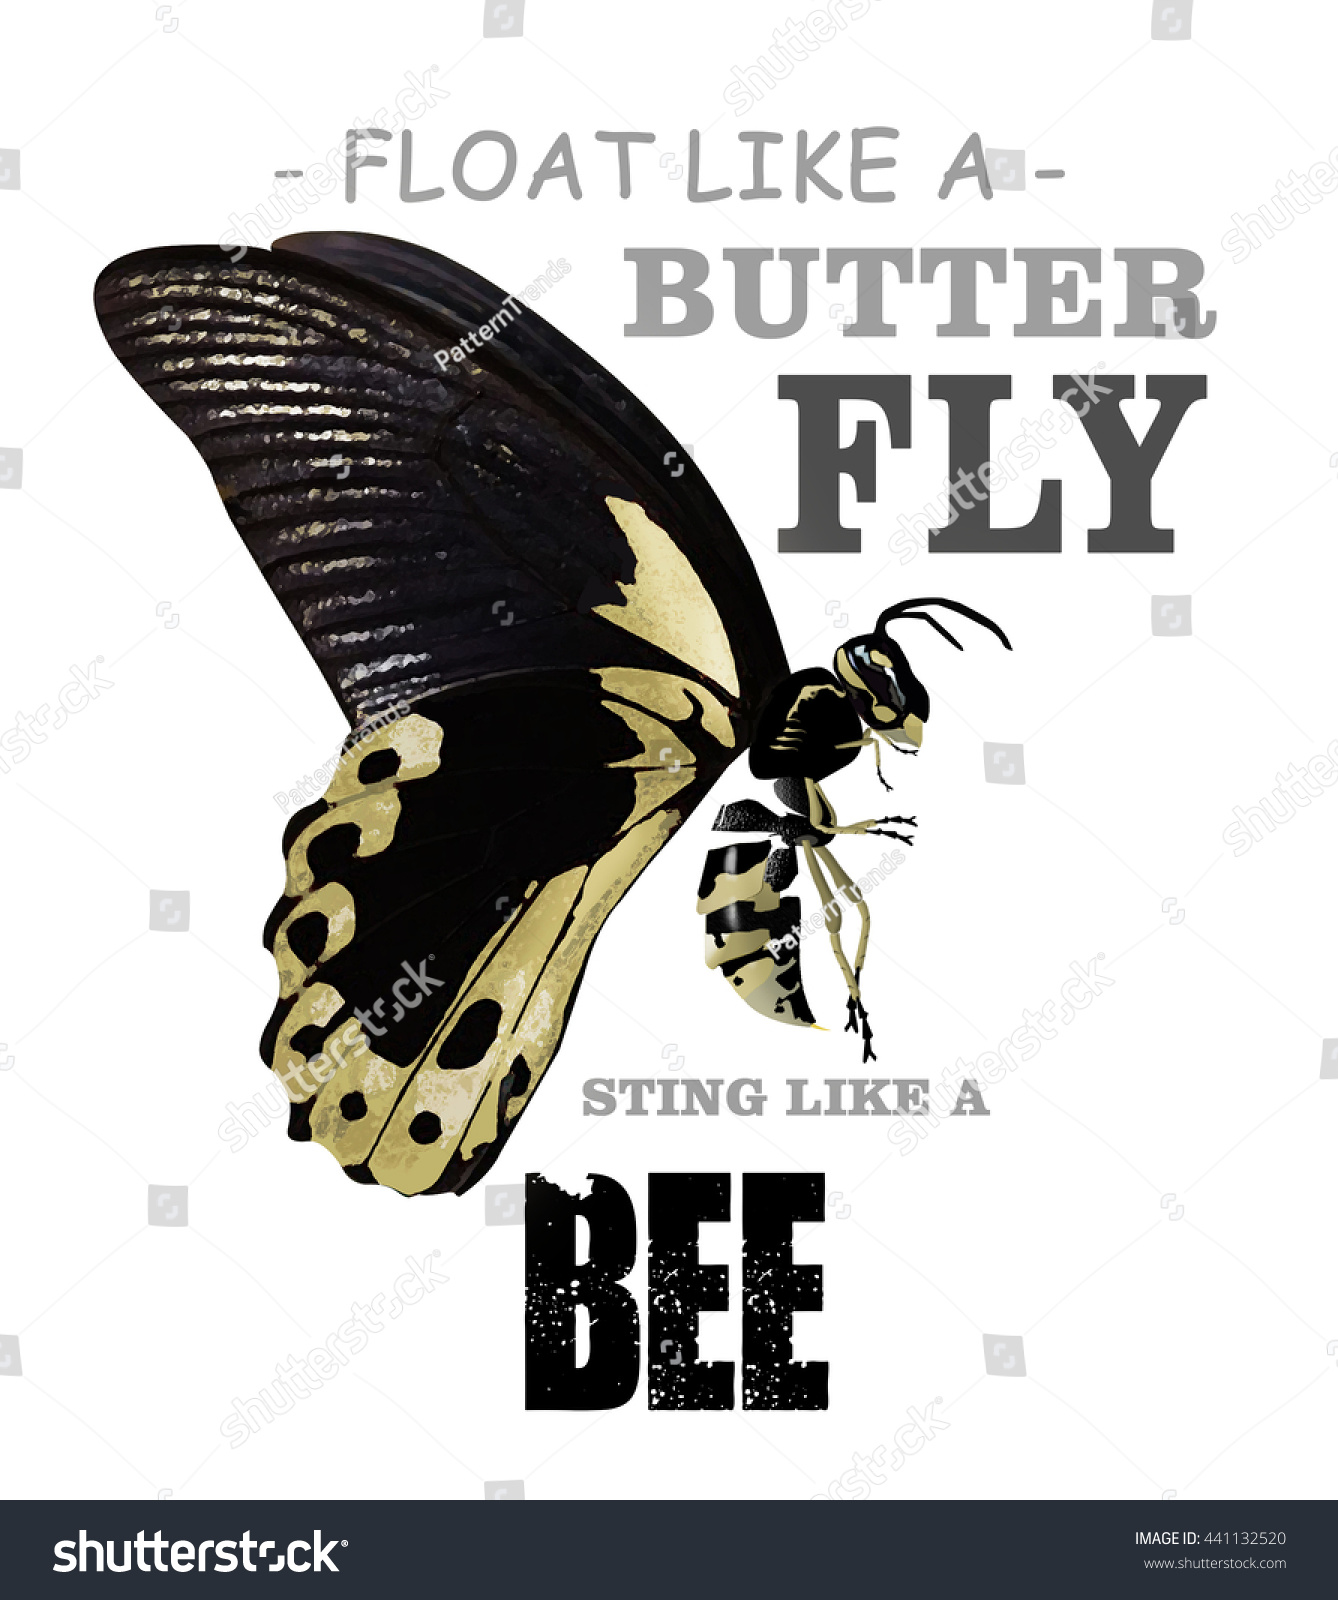 A bee butterfly like like float sting a “Float Like